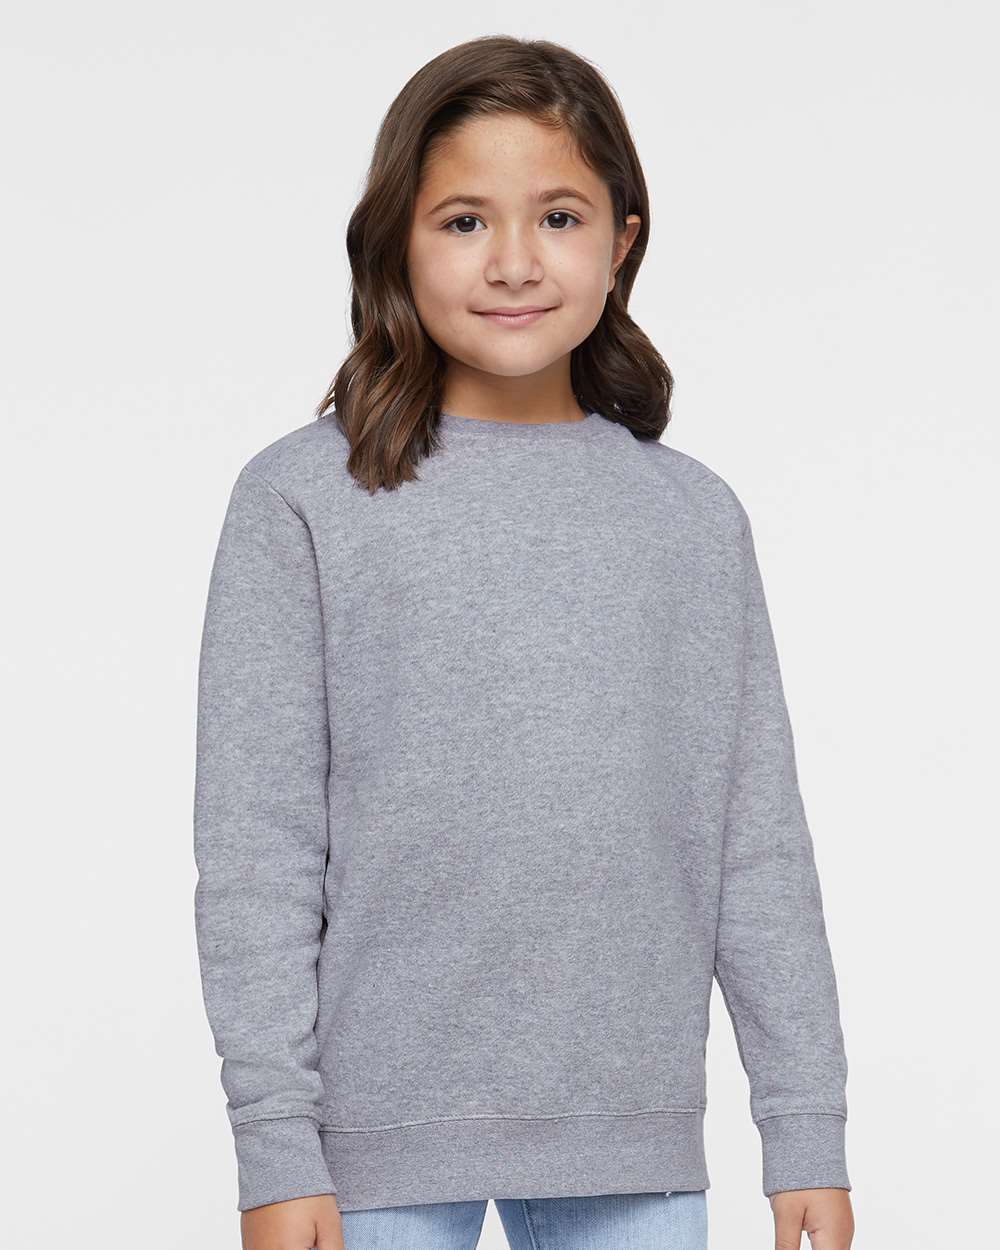 Premium Youth Fleece Crewneck Sweatshirt | 7.4 oz./yd², 60/40 Combed ...